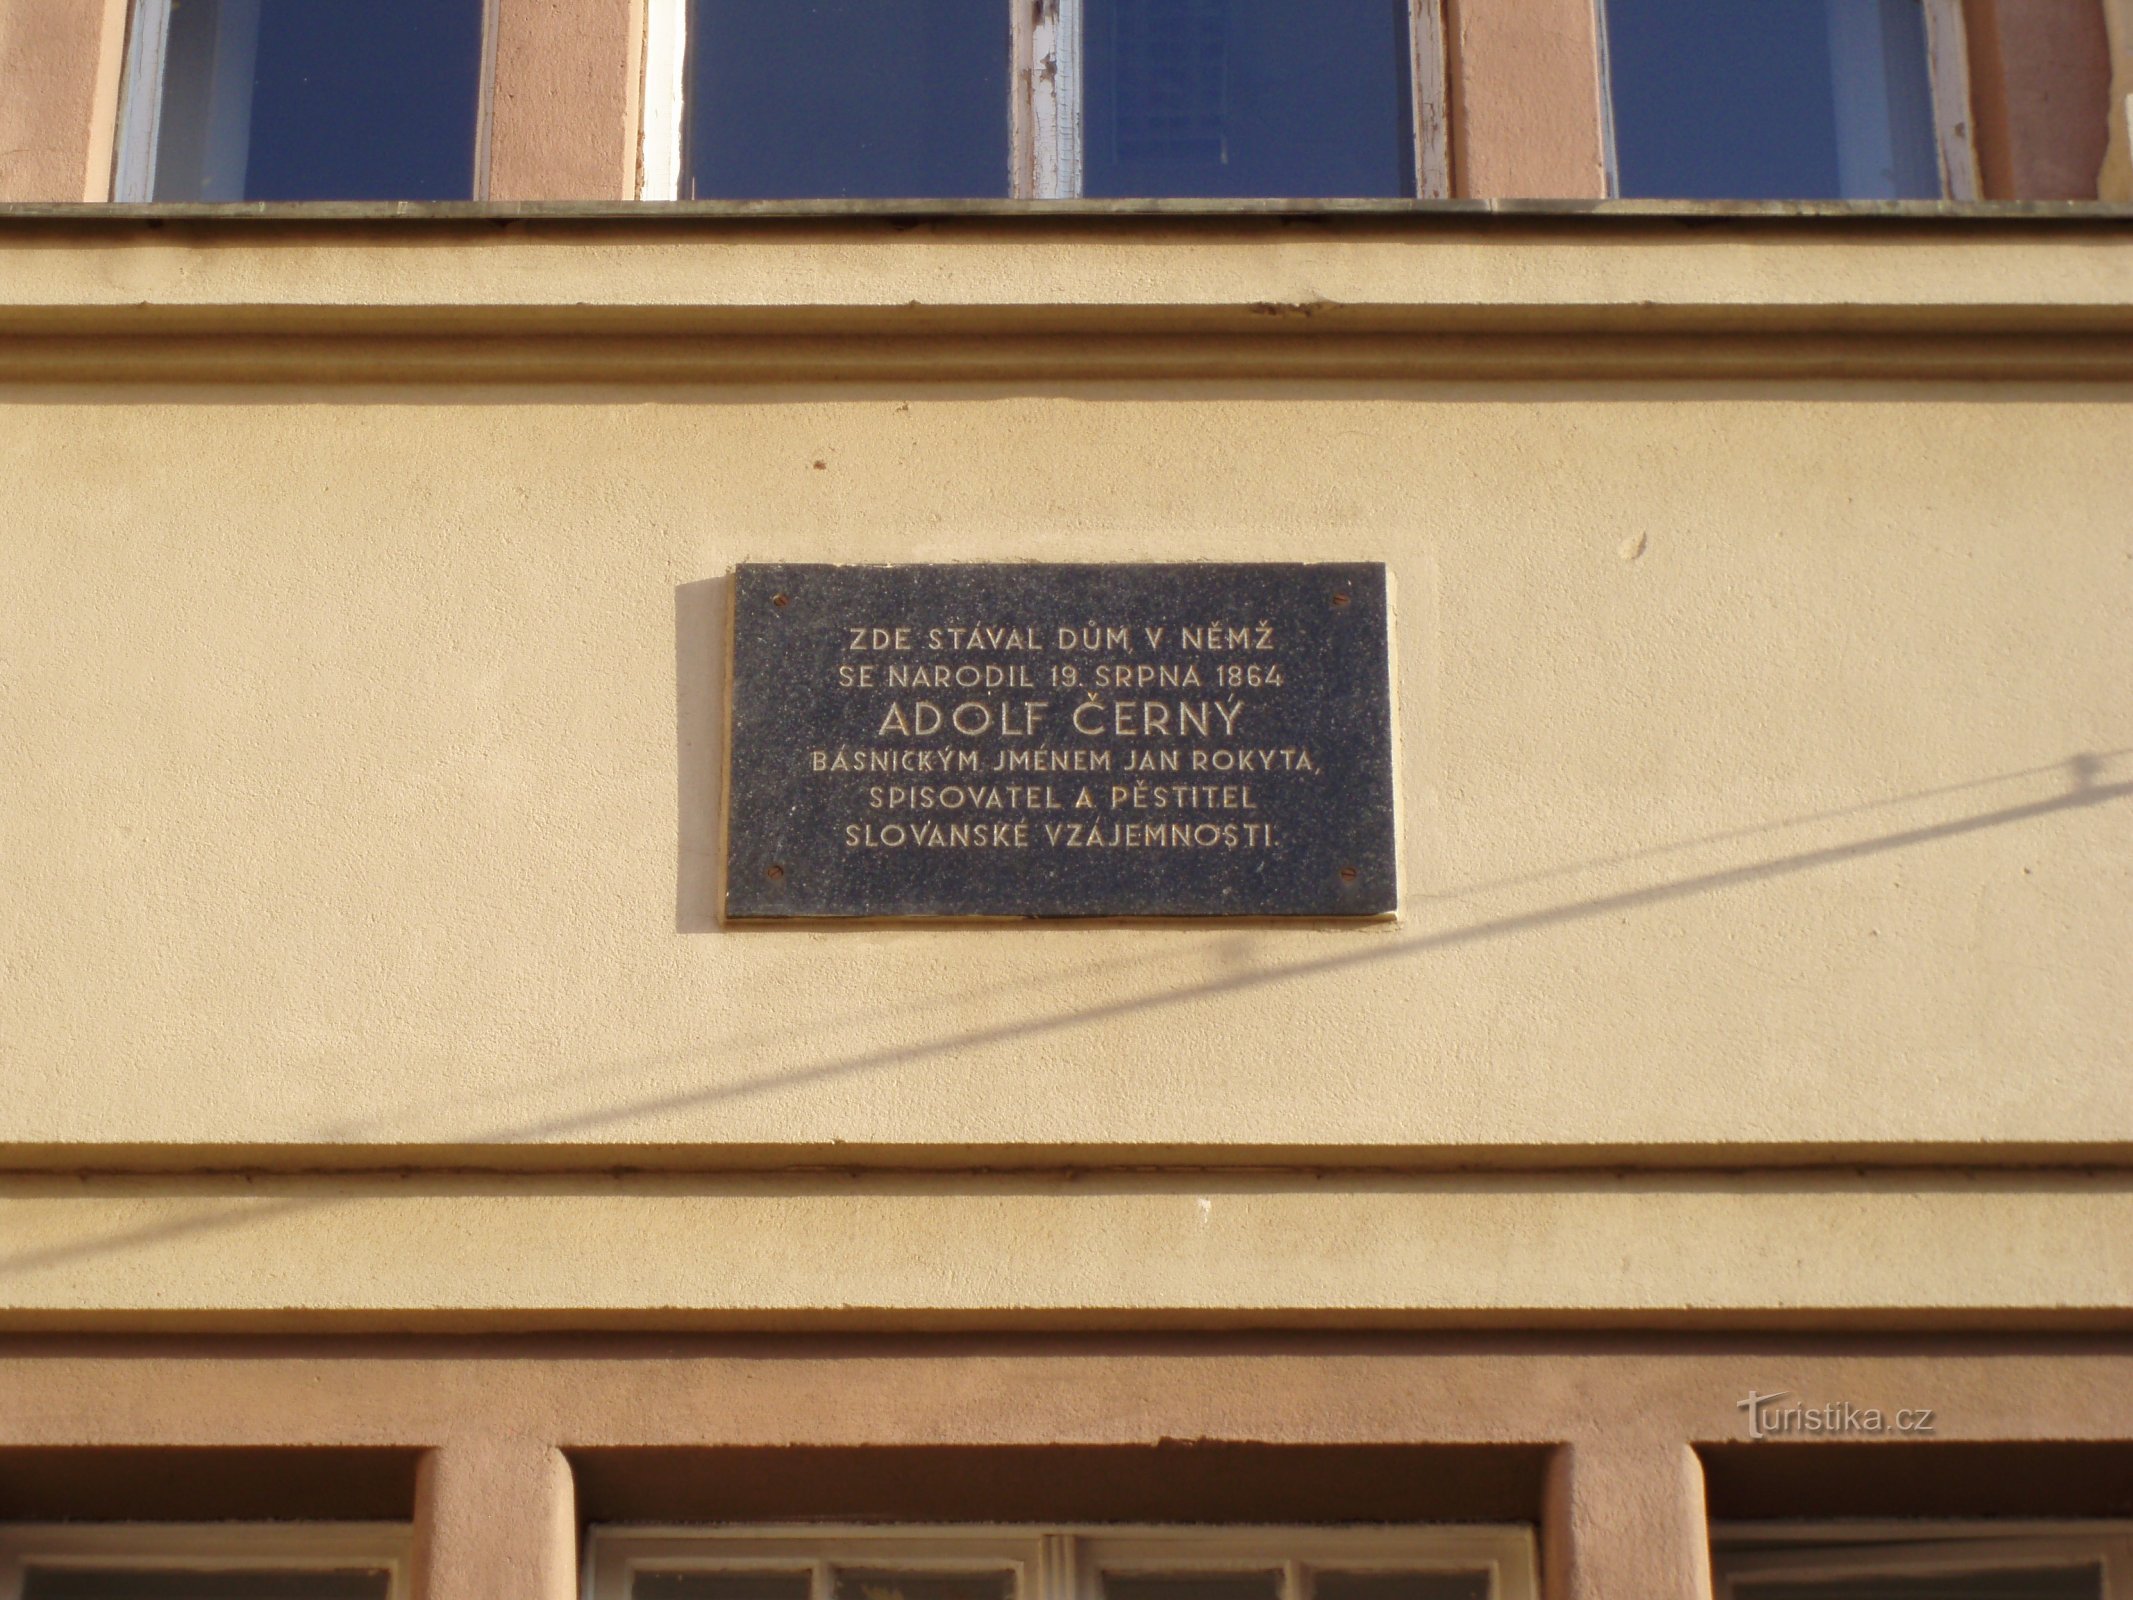 Tấm bảng tưởng niệm Adolf Černý tại số 121 (Hradec Králové, 28.2.2011/XNUMX/XNUMX)